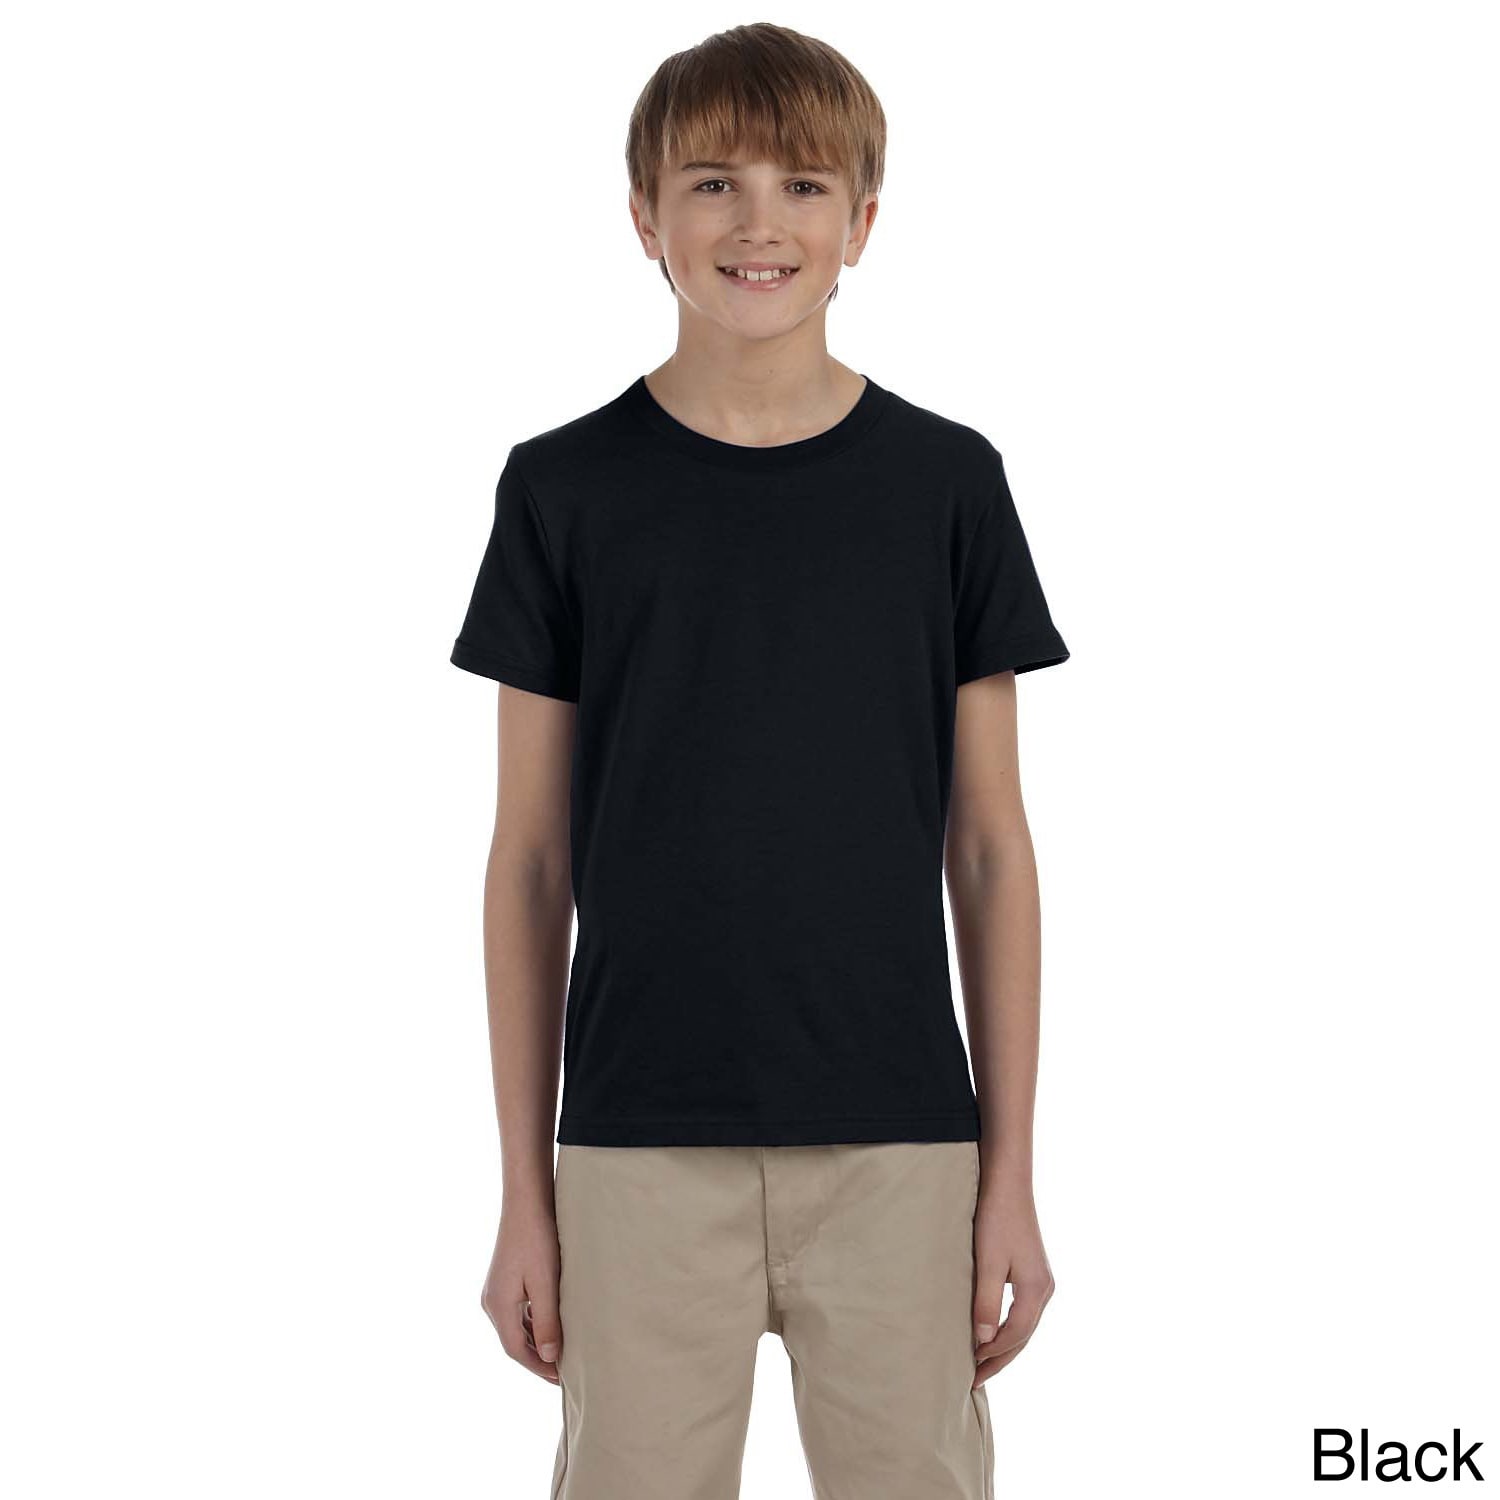 Canvas Youth Boys Jersey Short sleeve T shirt Black Size L (14 16)